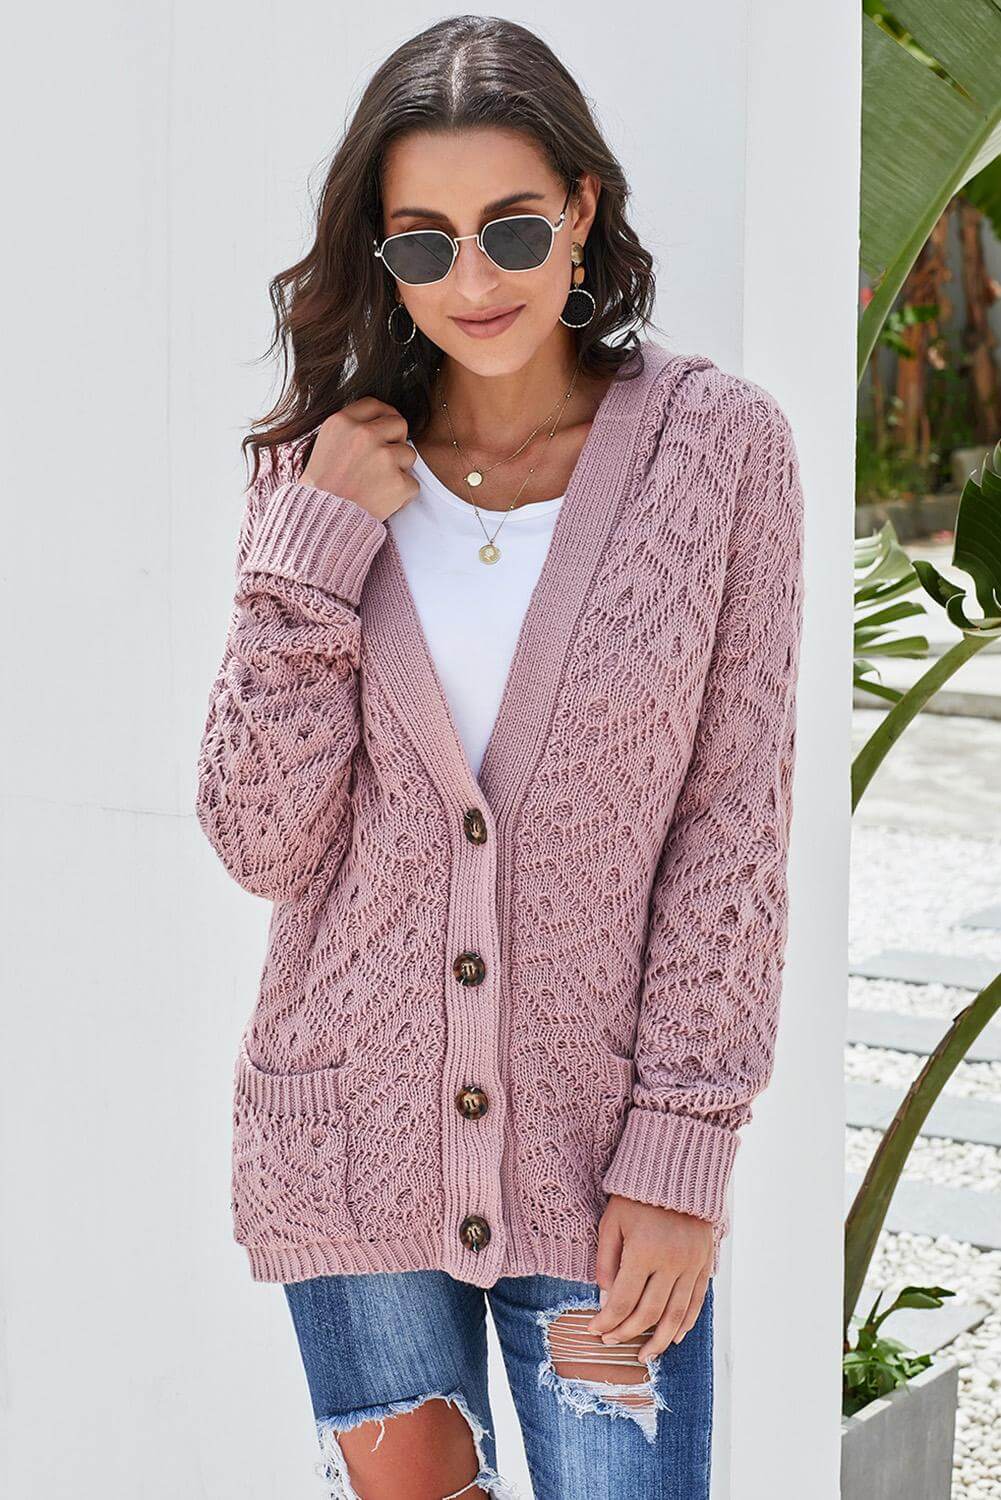 Walmart Ladies Outerwear Pink Knit Hooded Cardigan Warmest Outerwear for Winter